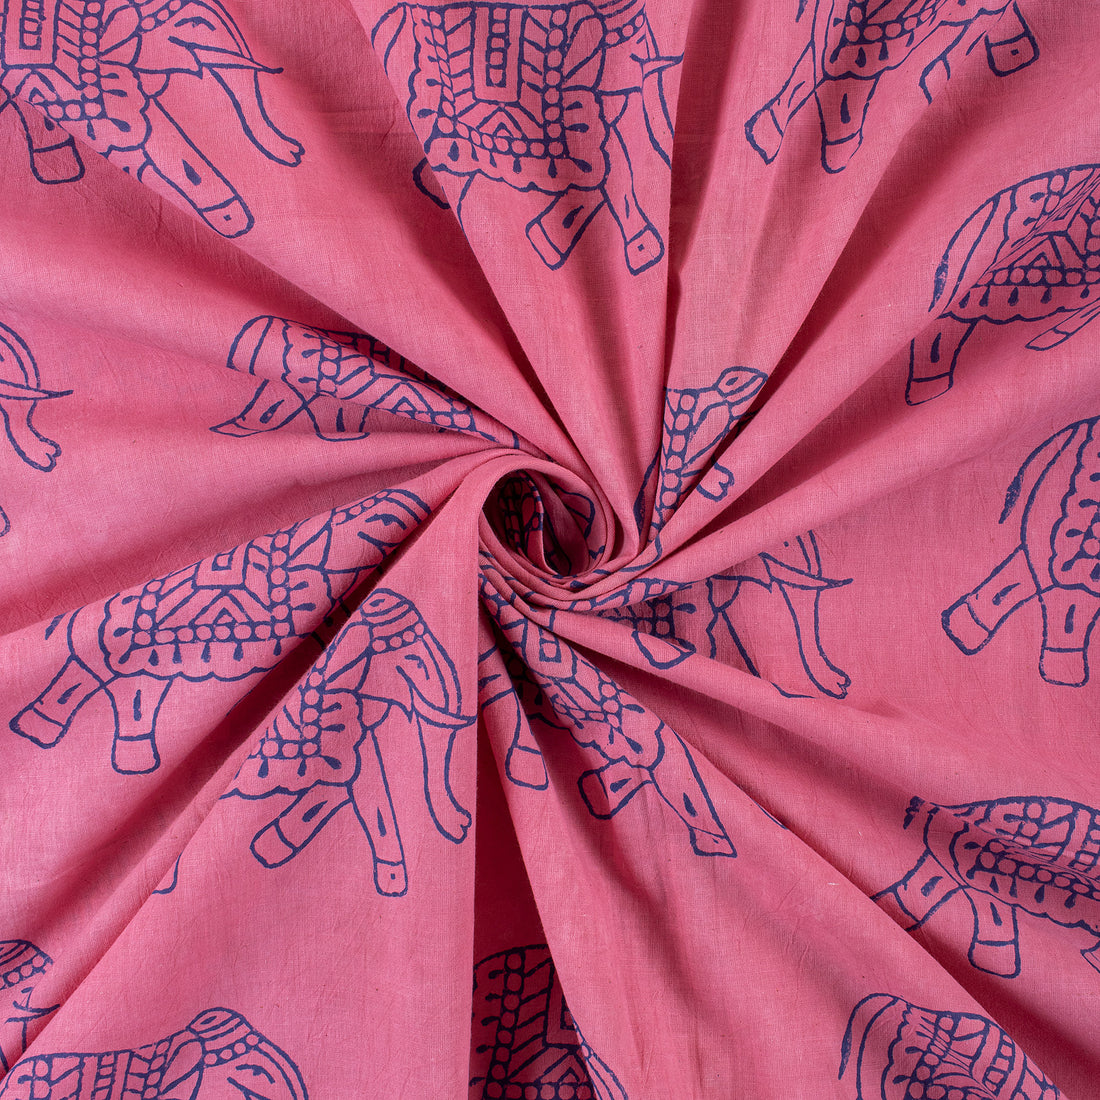 Elephant Printed Cotton Dabu Fabric